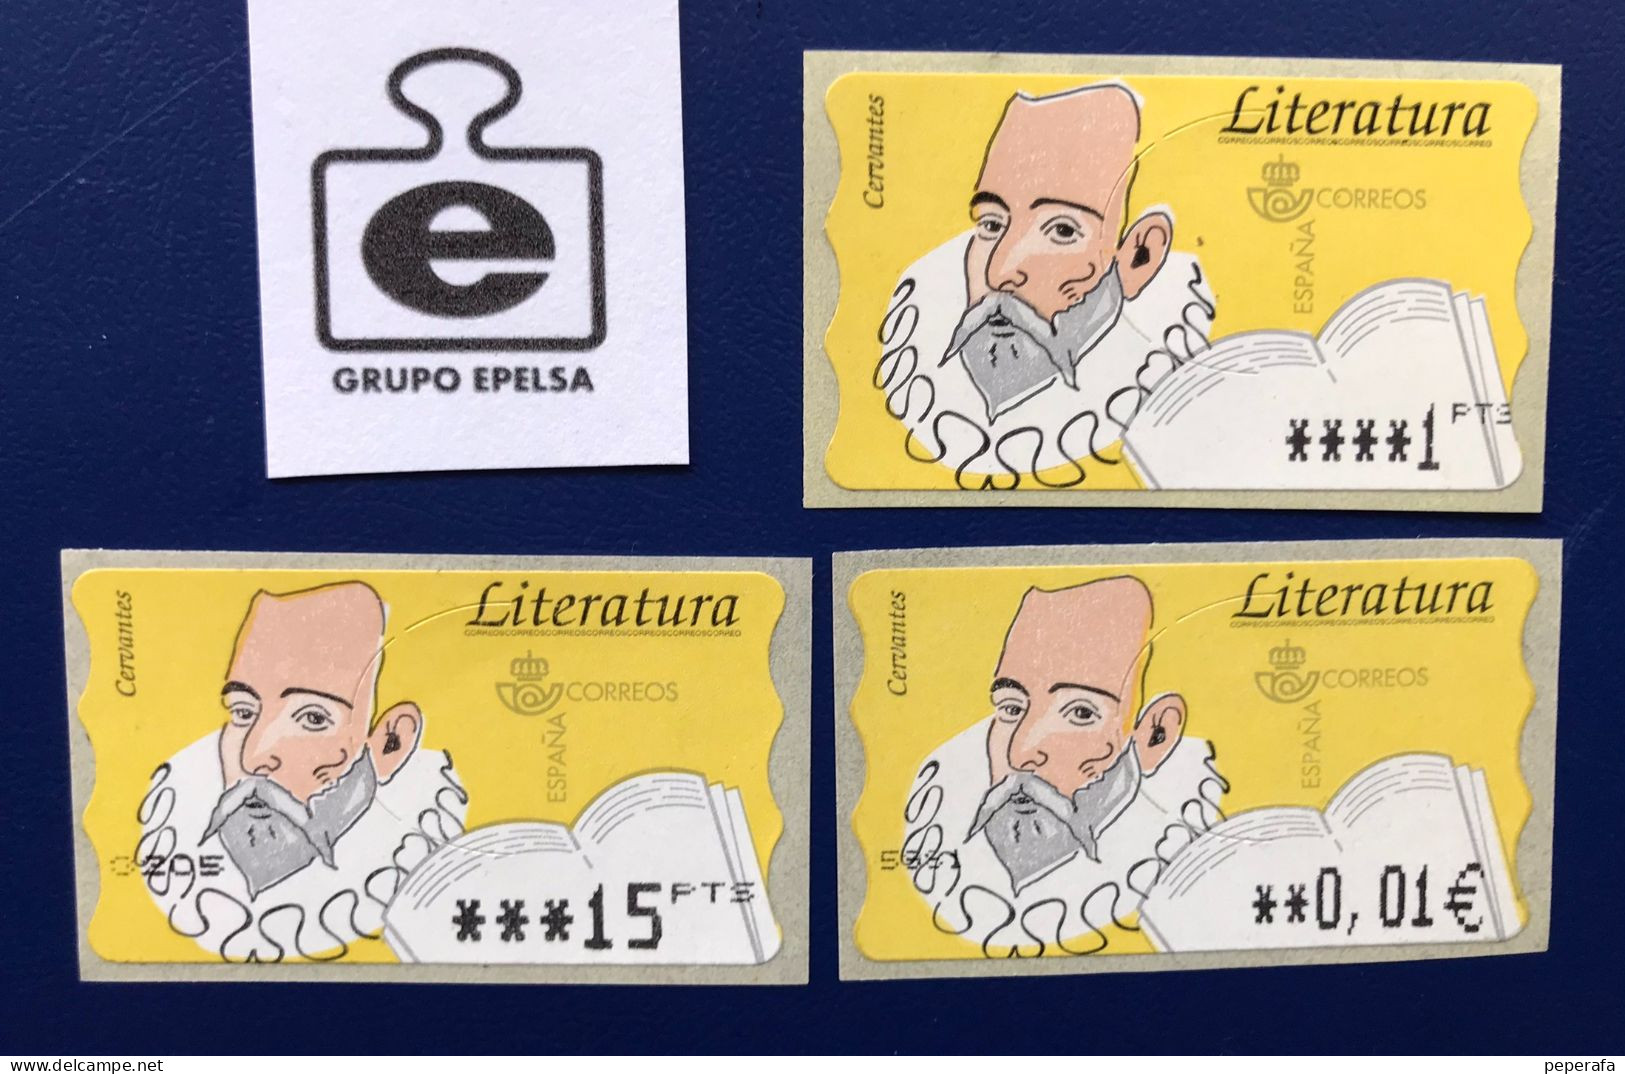 España Spain 1996, LITERATURA CERVANTES, ATM EPELSA, 3 ATM, PAPEL FOSFORESCENTE, NUEVO PTS / EURO - Machine Labels [ATM]